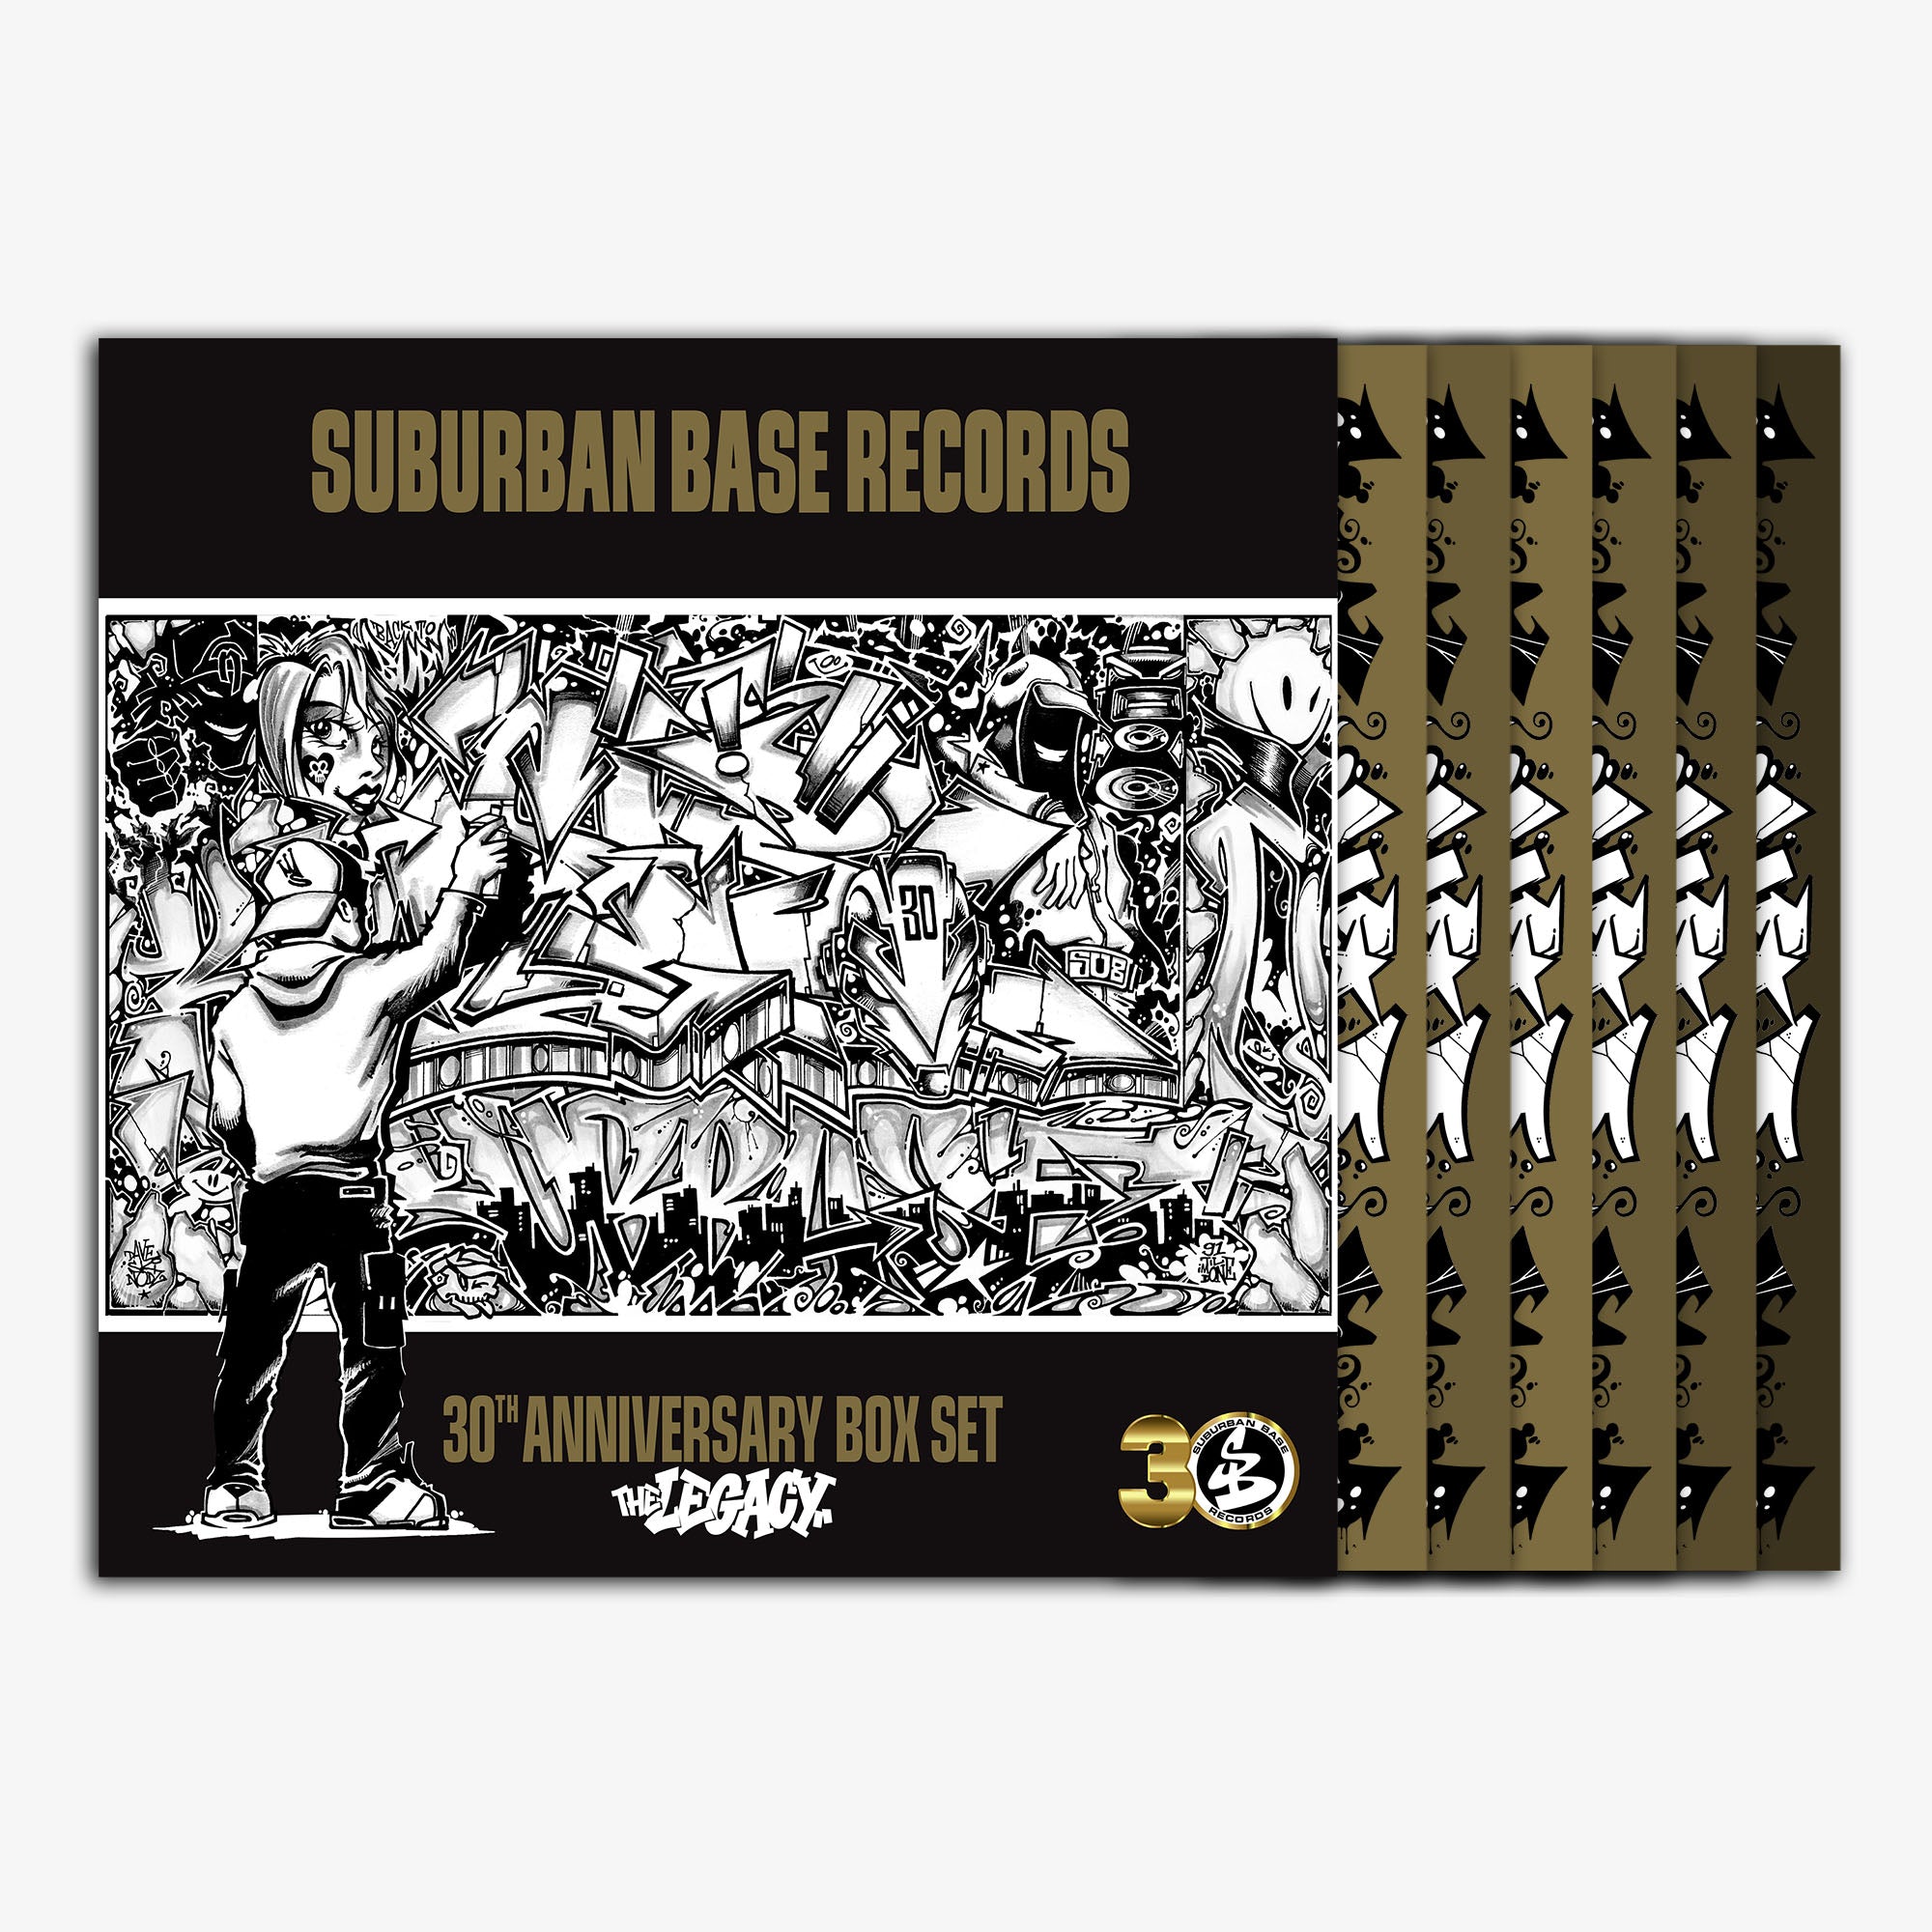 SUBURBAN BASE 'THE LEGACY - 30TH ANNIVERSARY' 6x12" (BOX SET)